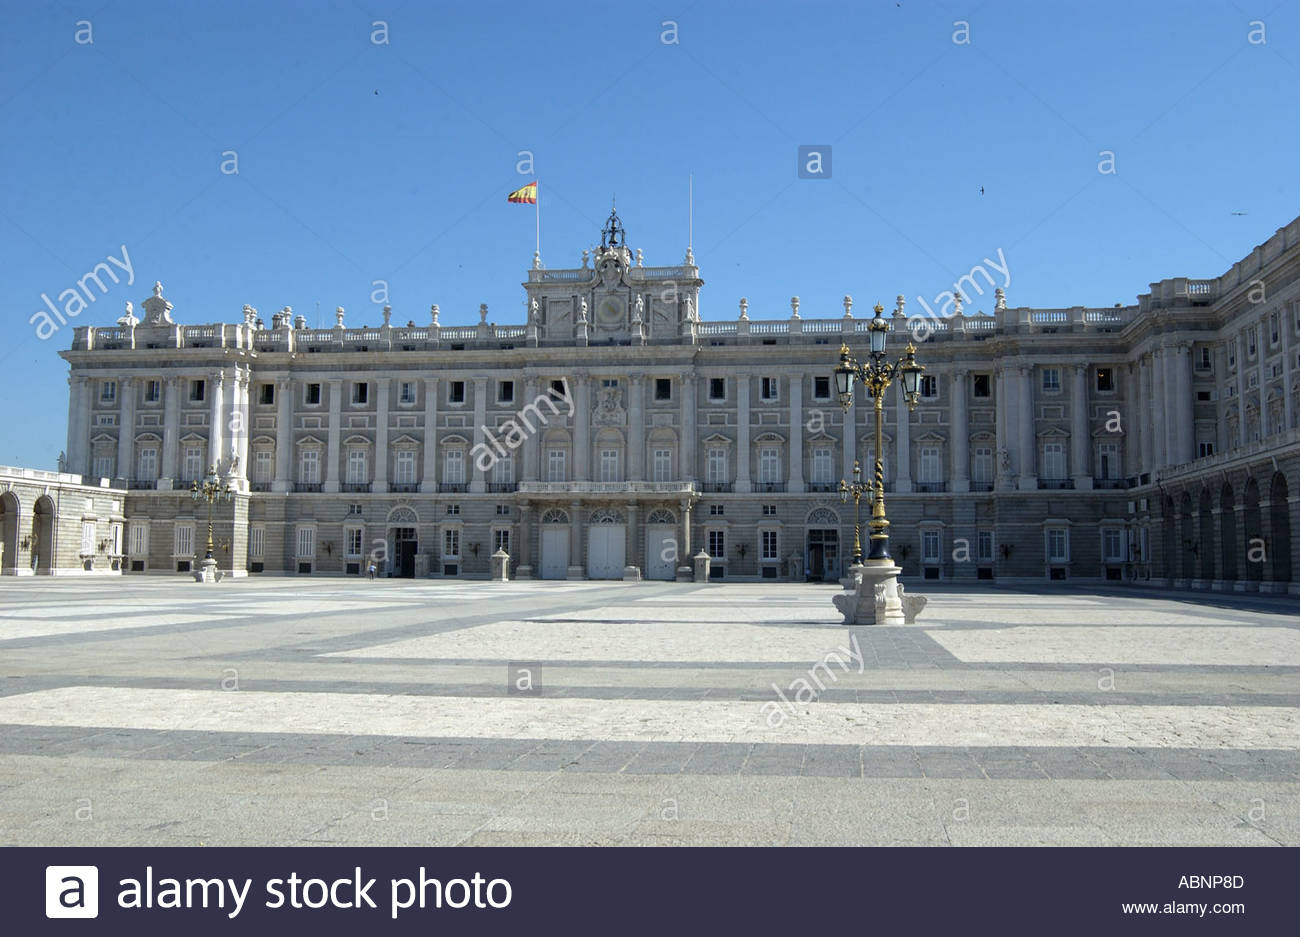 Plaza de la Almeria In The Royal Palace Of Madrid